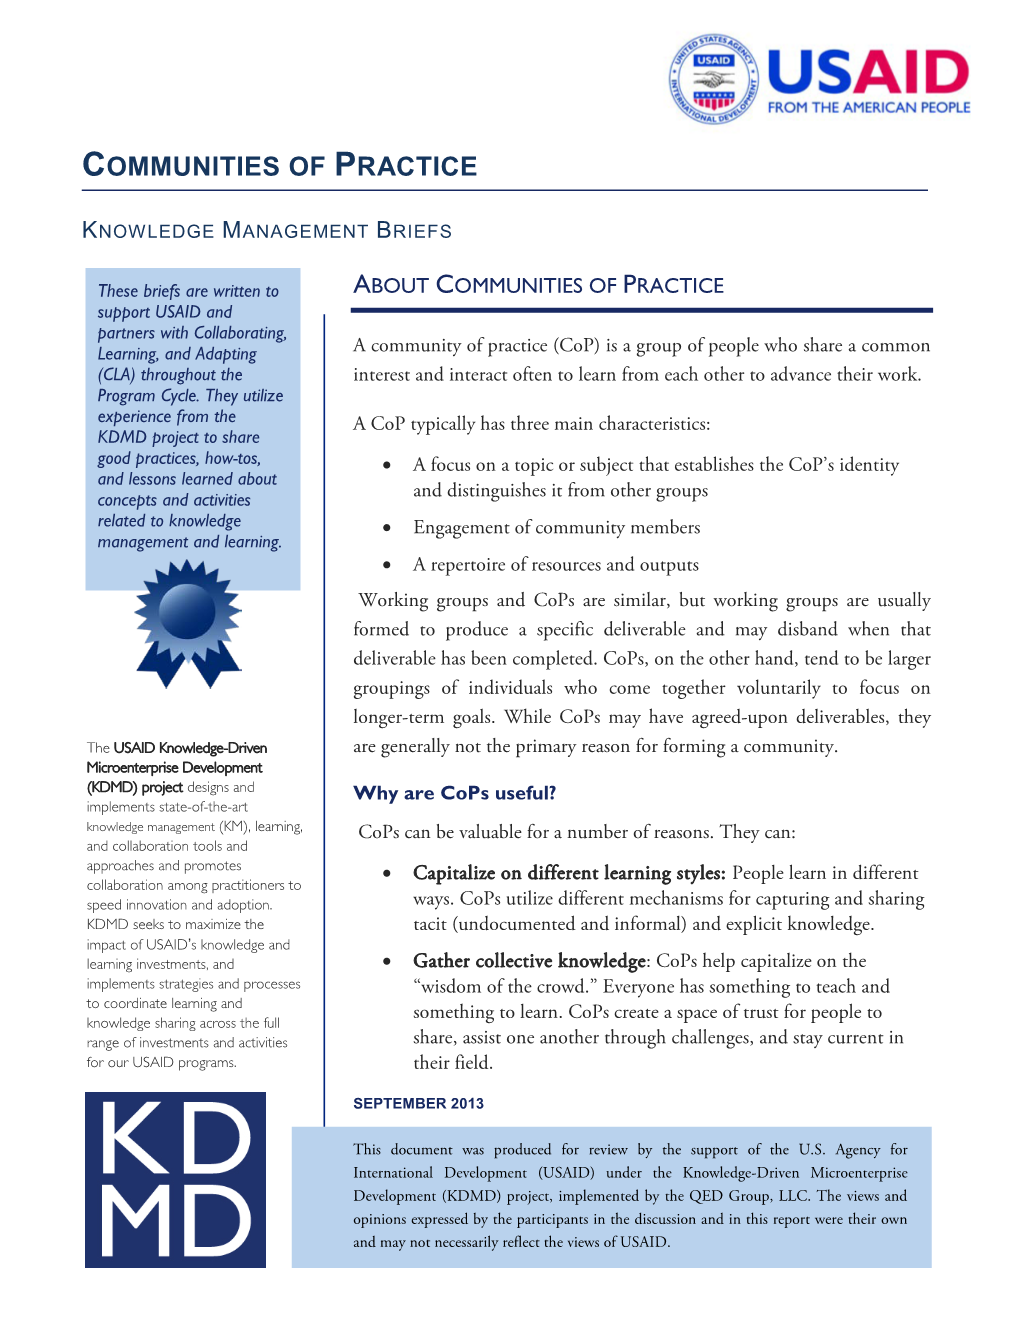 Communities of Practice: Knowledge Management Briefs